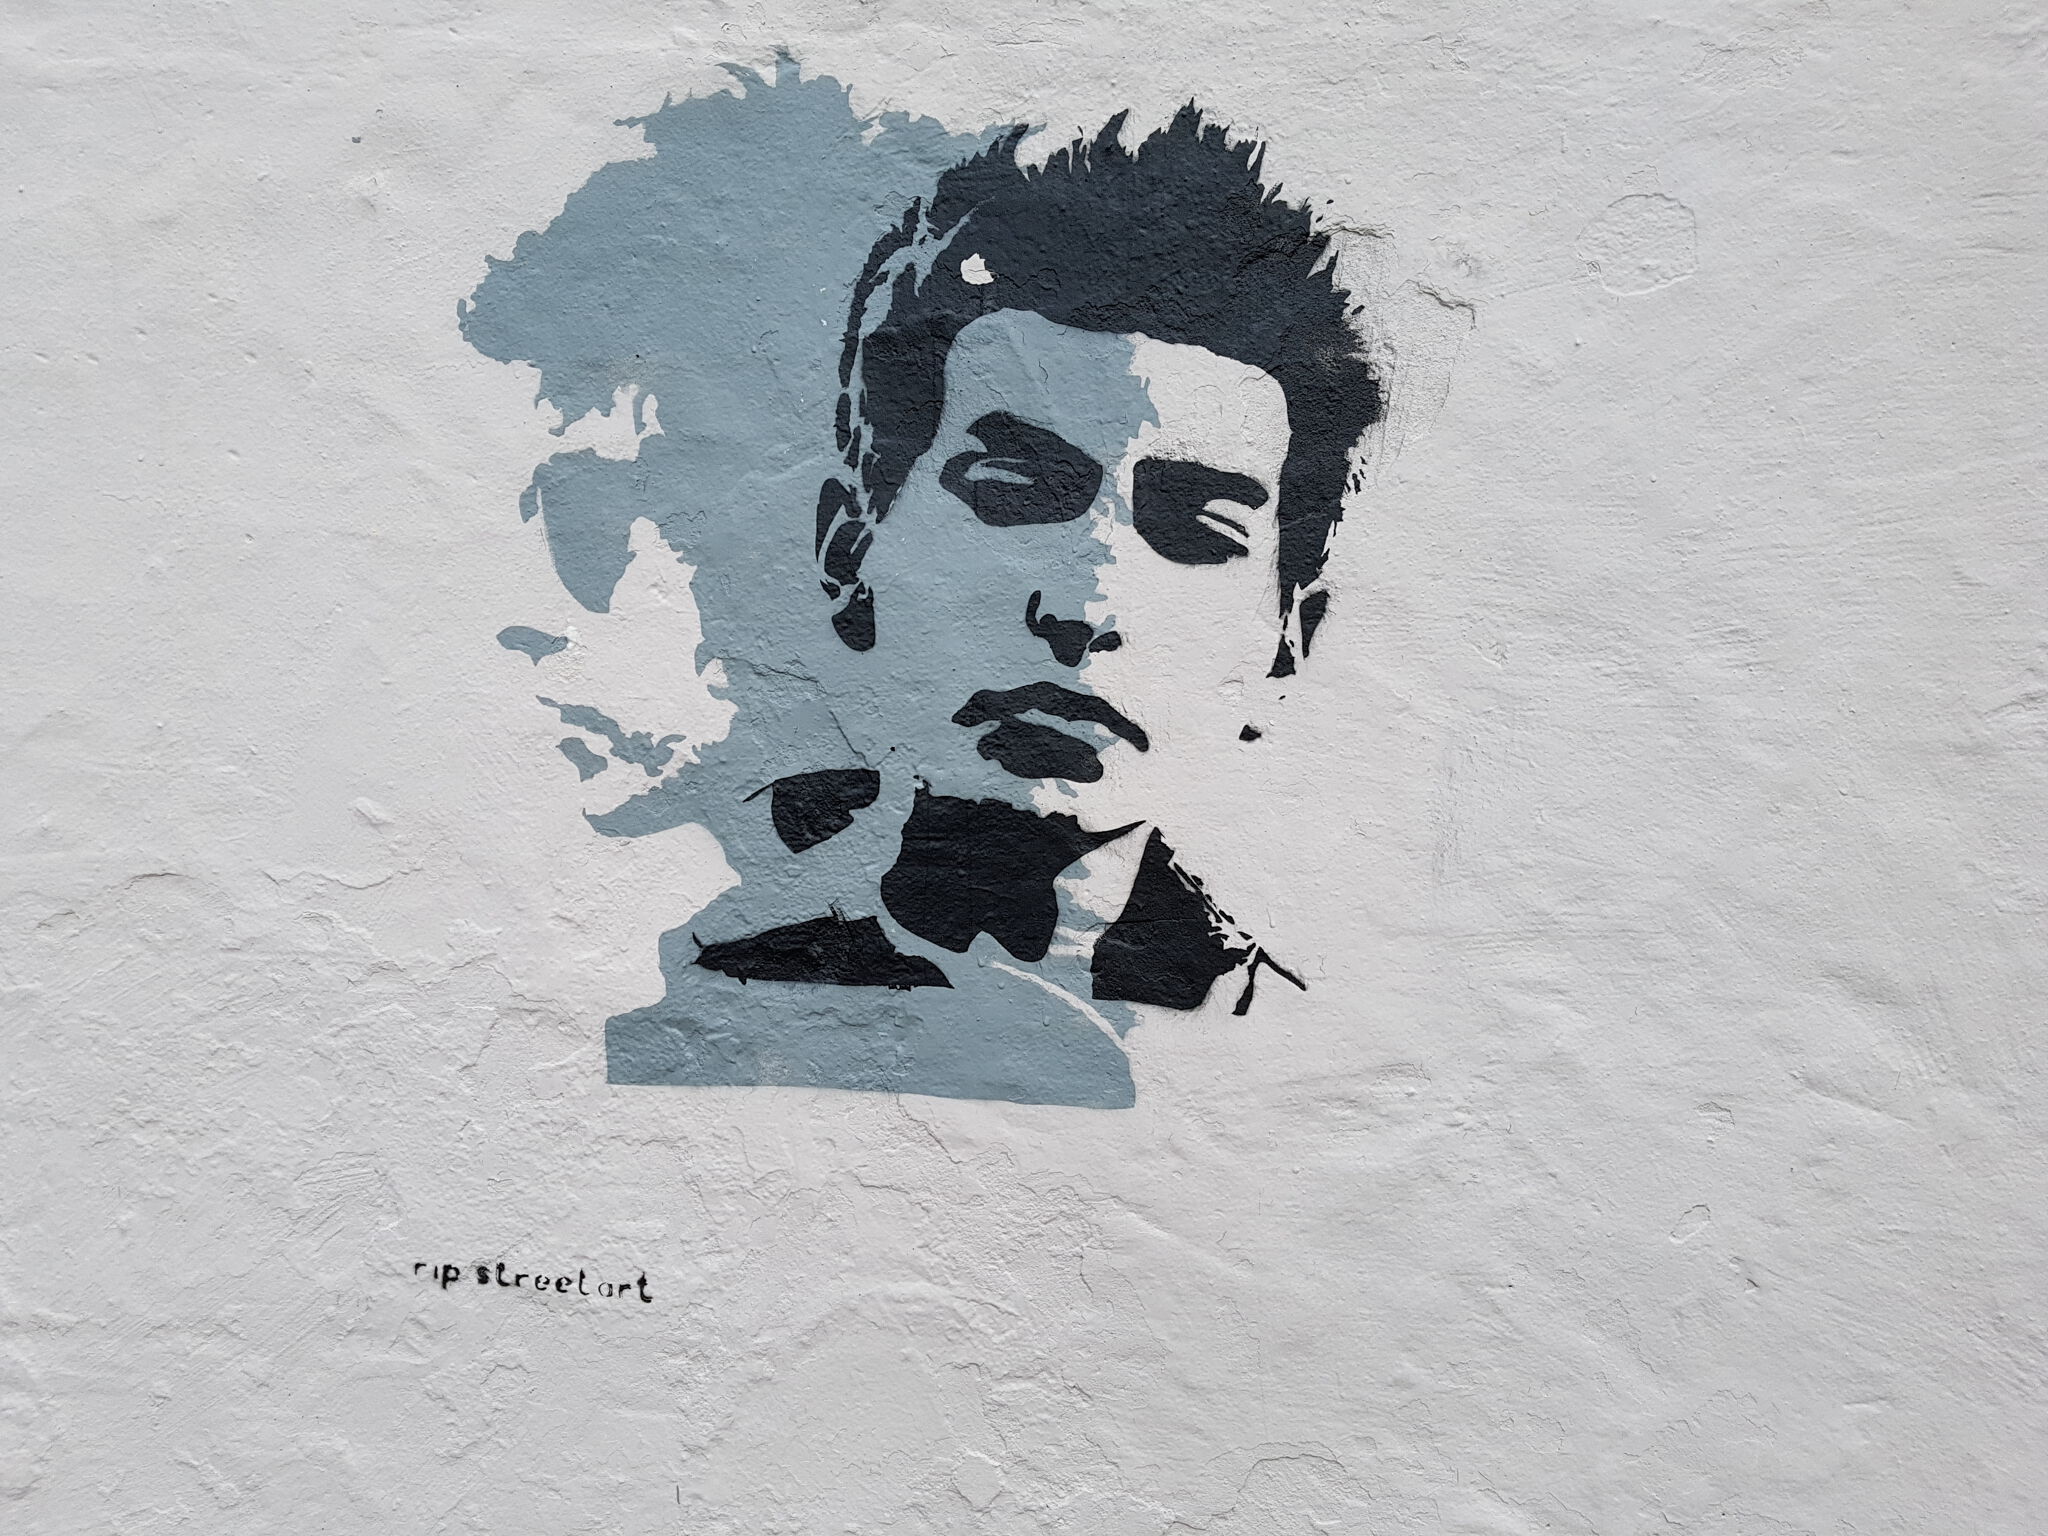 RIP_streetart&mdash;Bob Dylan